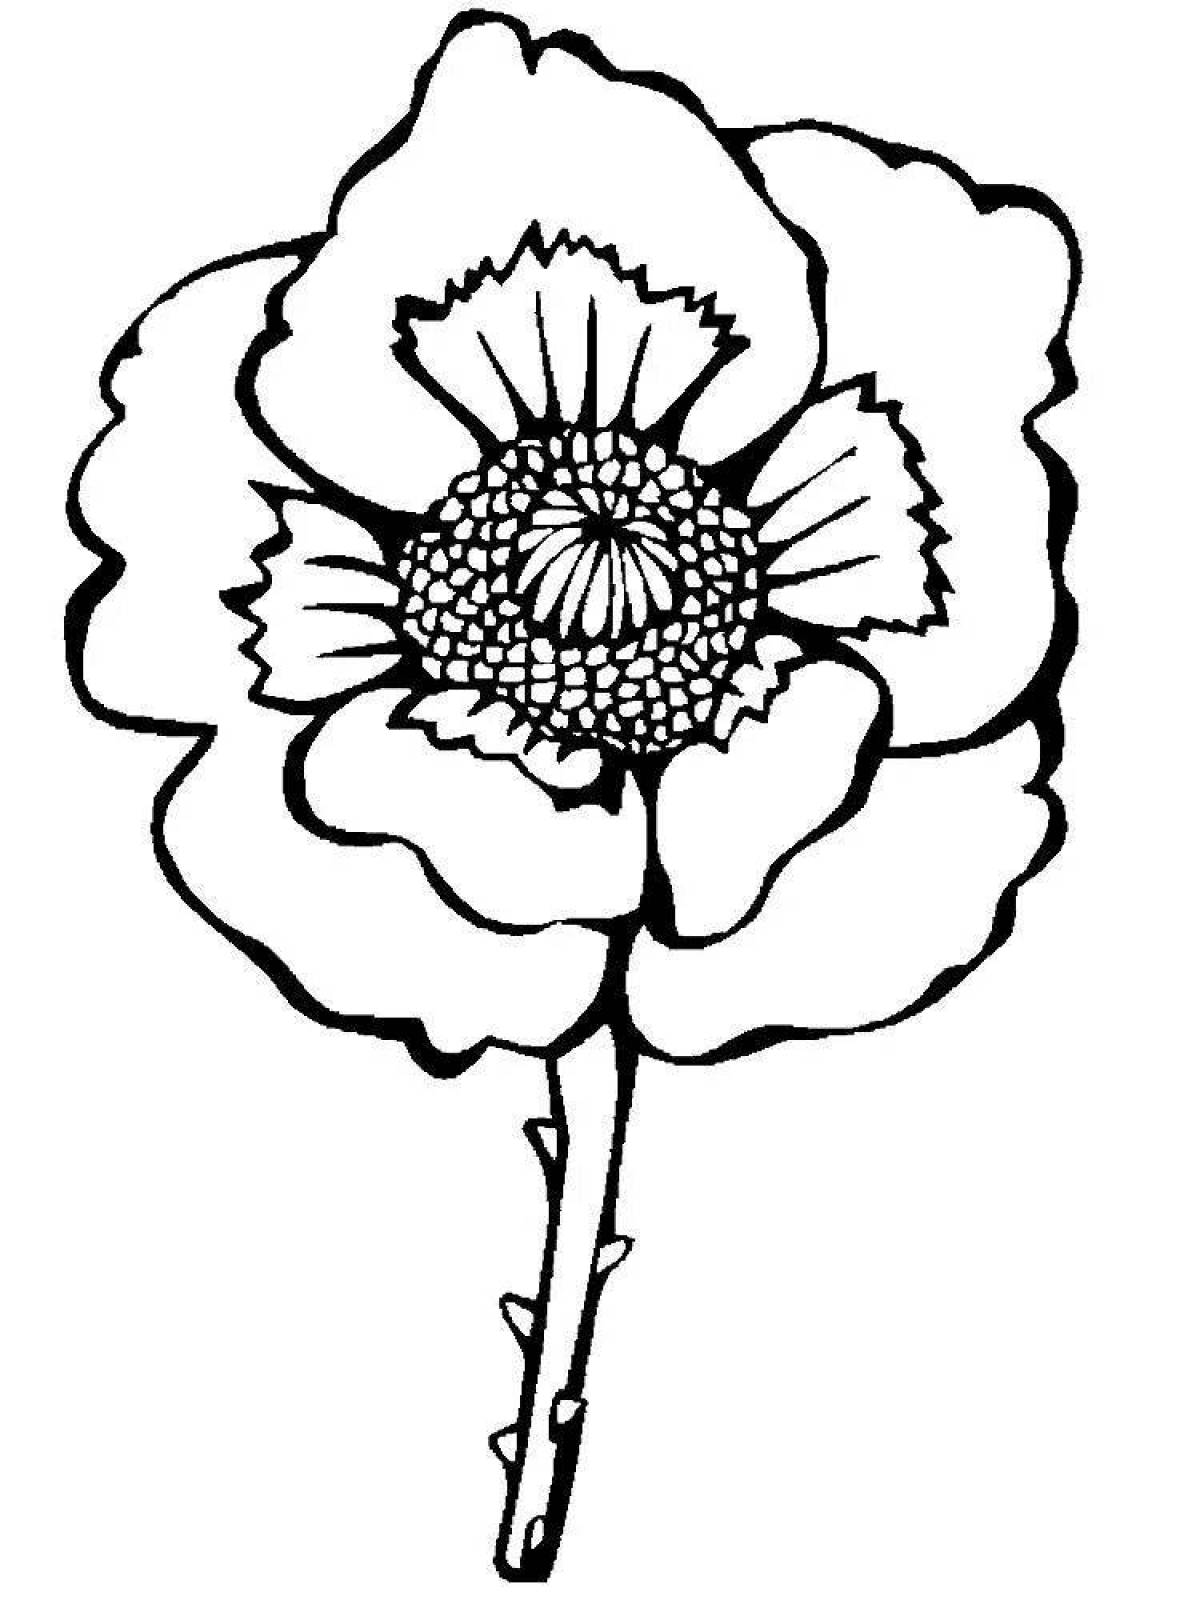 Poppy flower #1